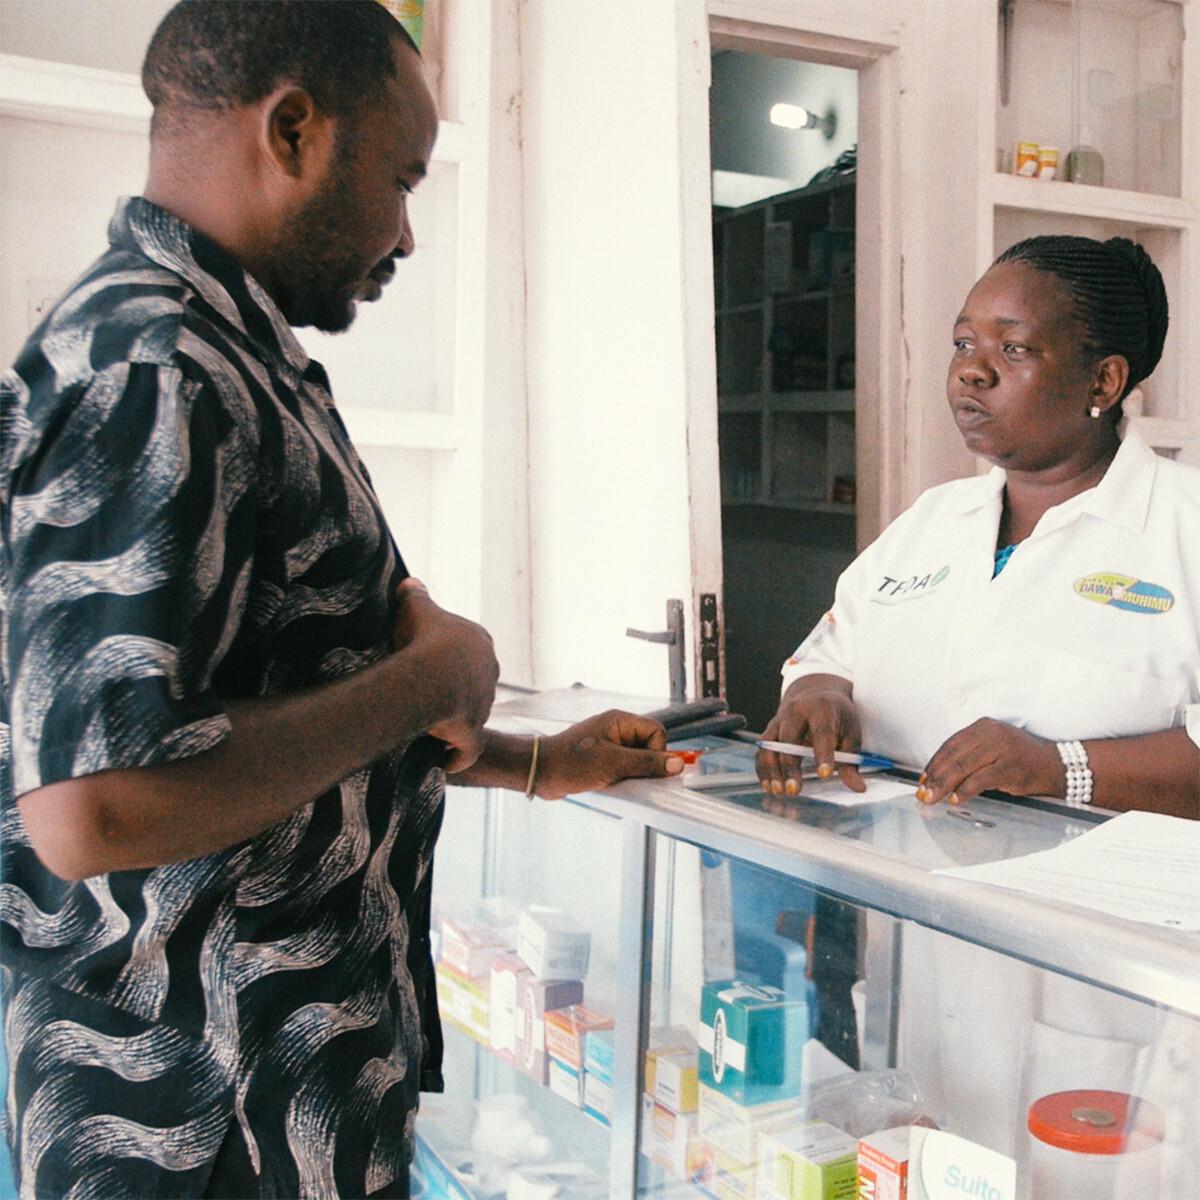 Customer and dispenser in a chemist's shop in Tanzania.